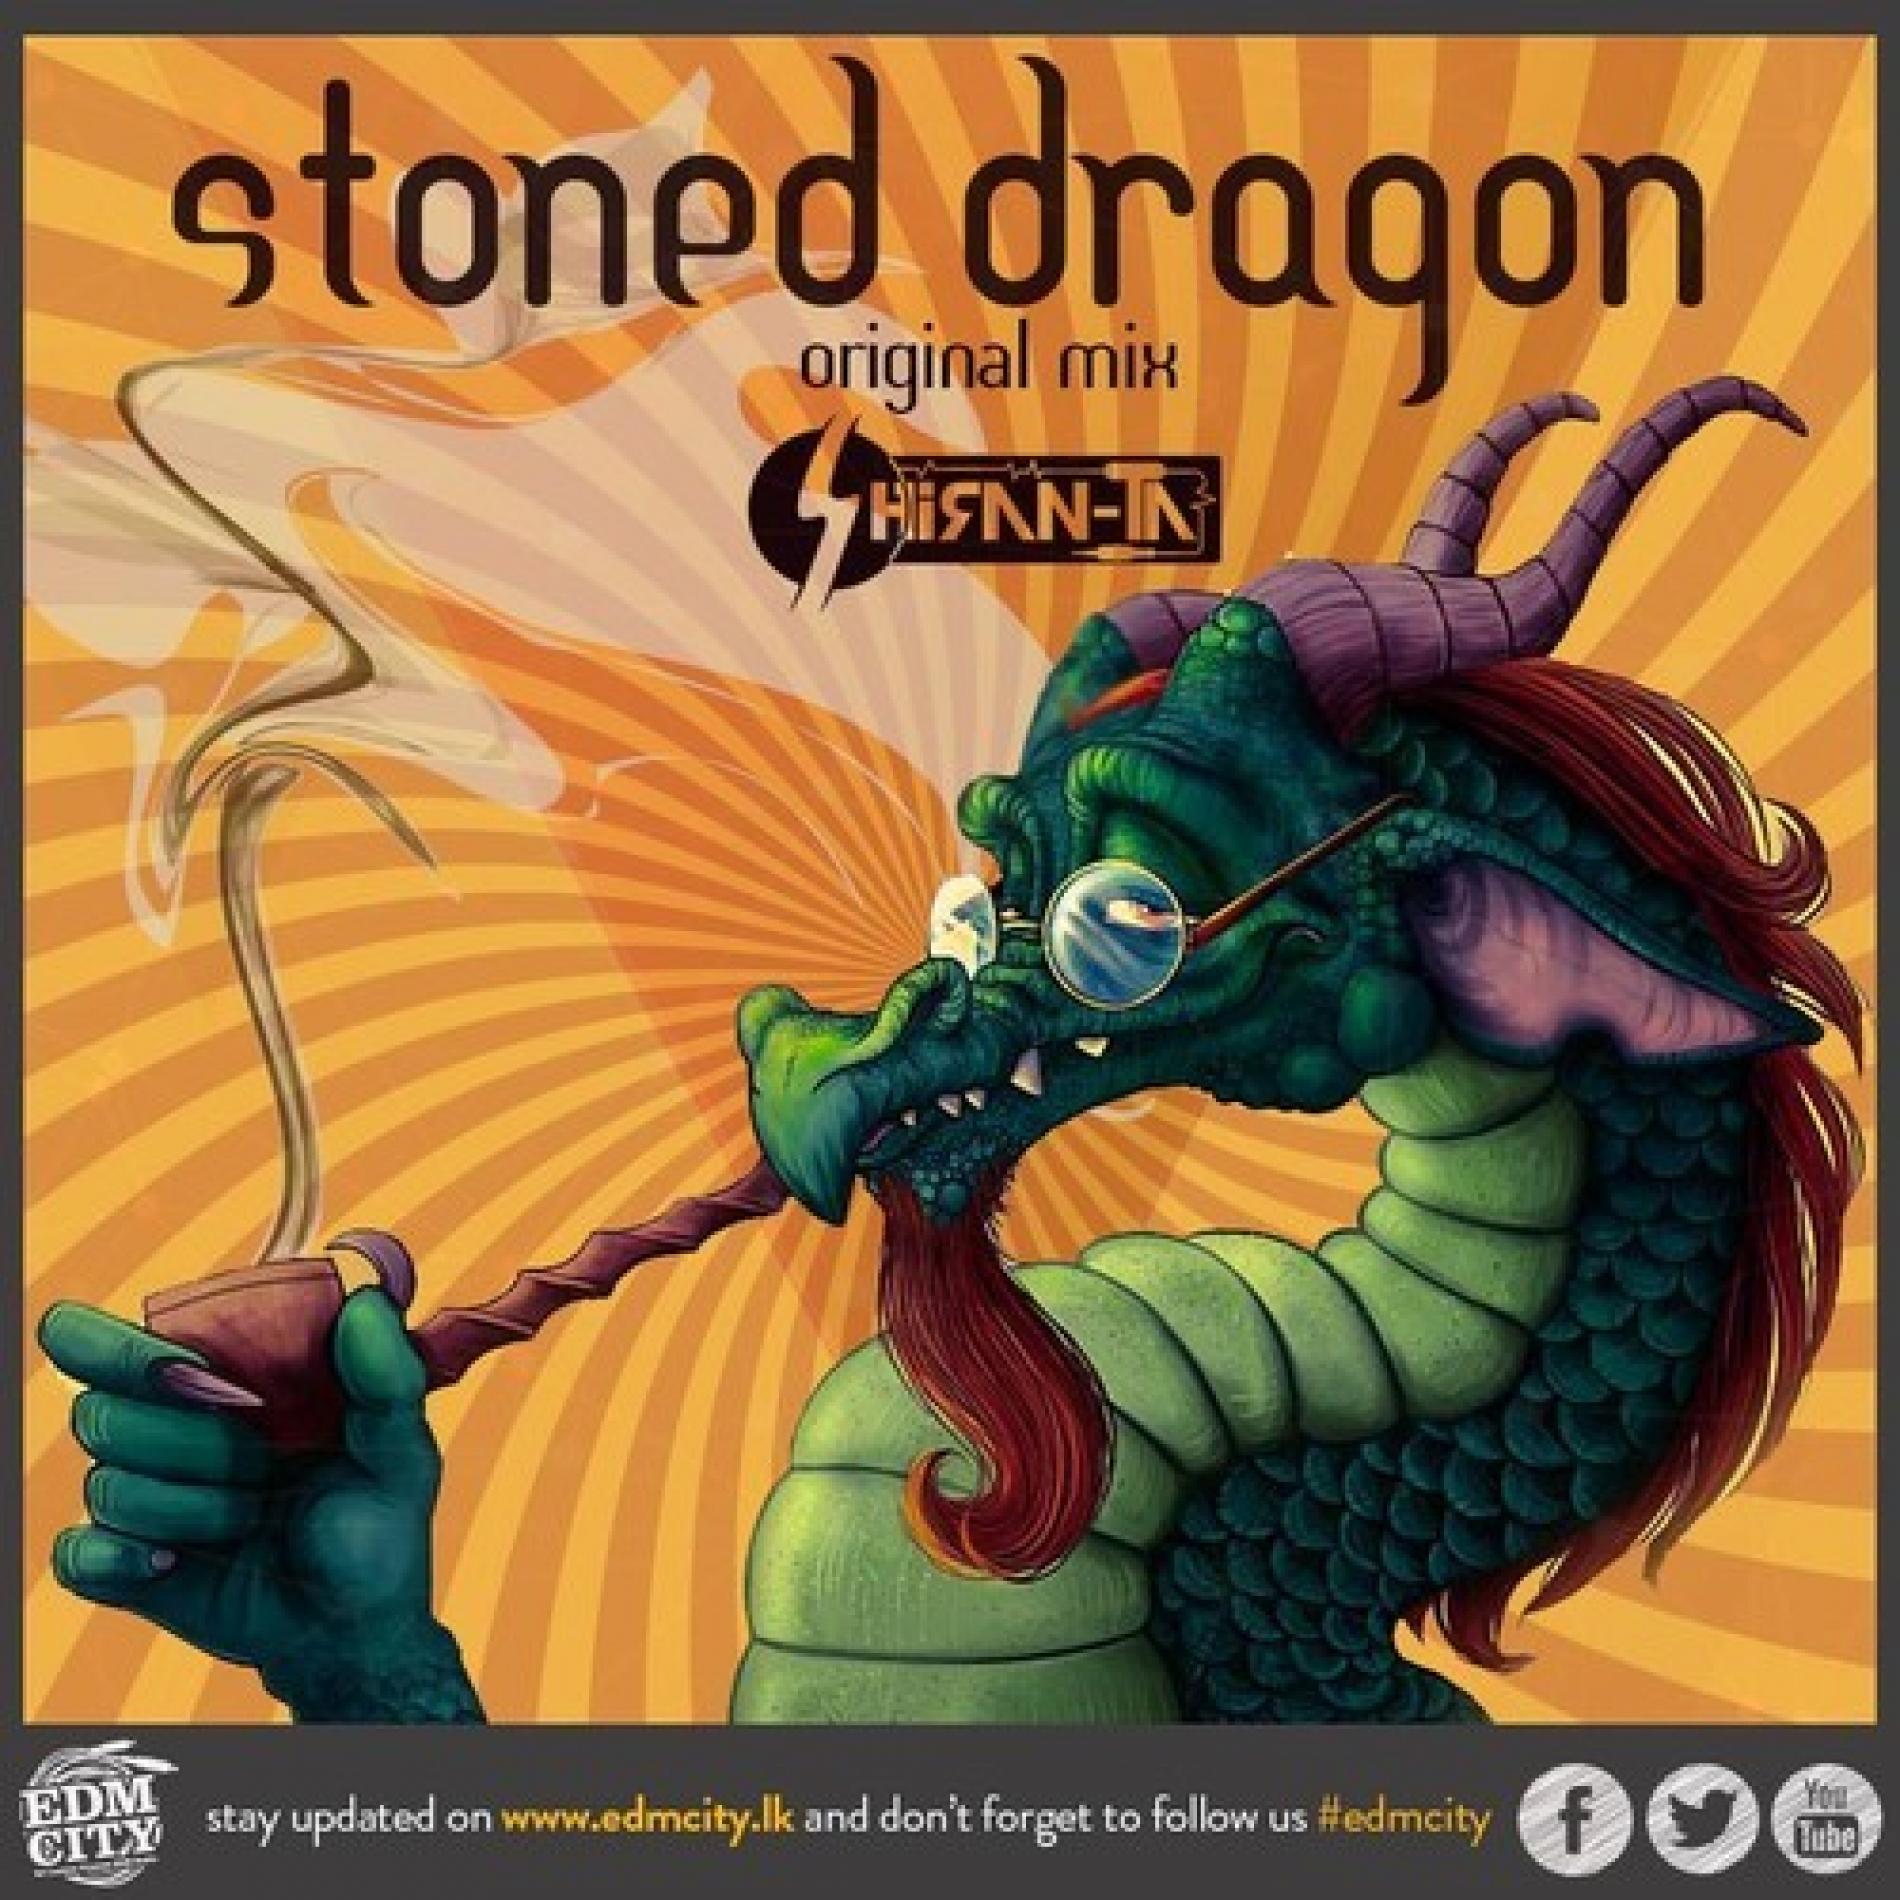 Shiran-Ta: Stoned Dragon